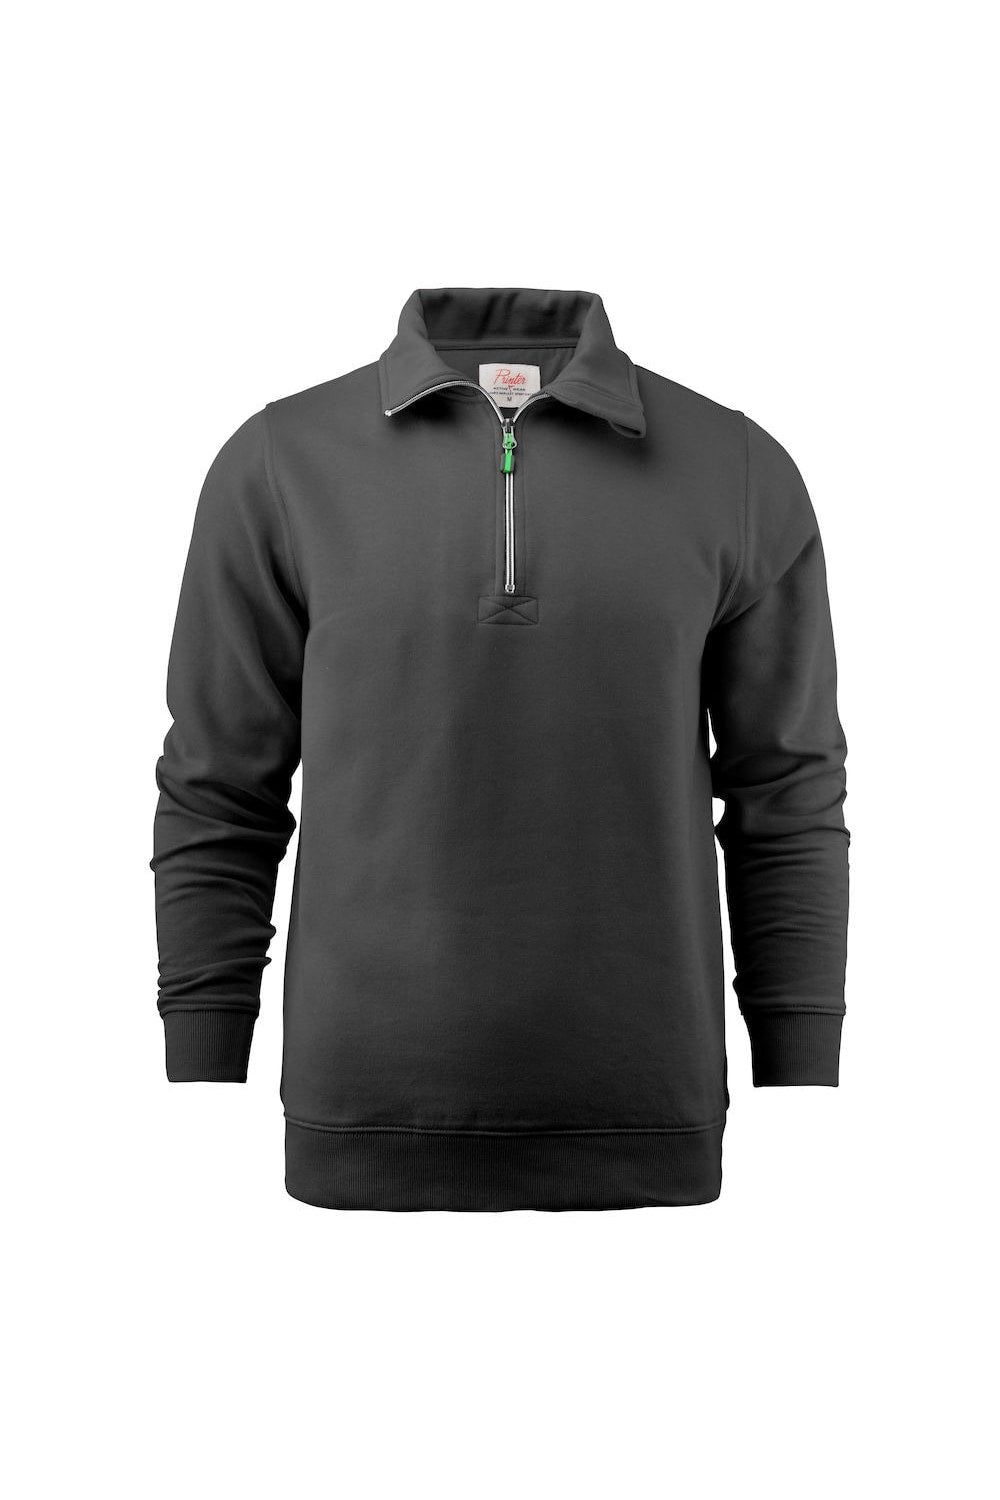 Unisex Adult Rounders RSX Sweatshirt -Black